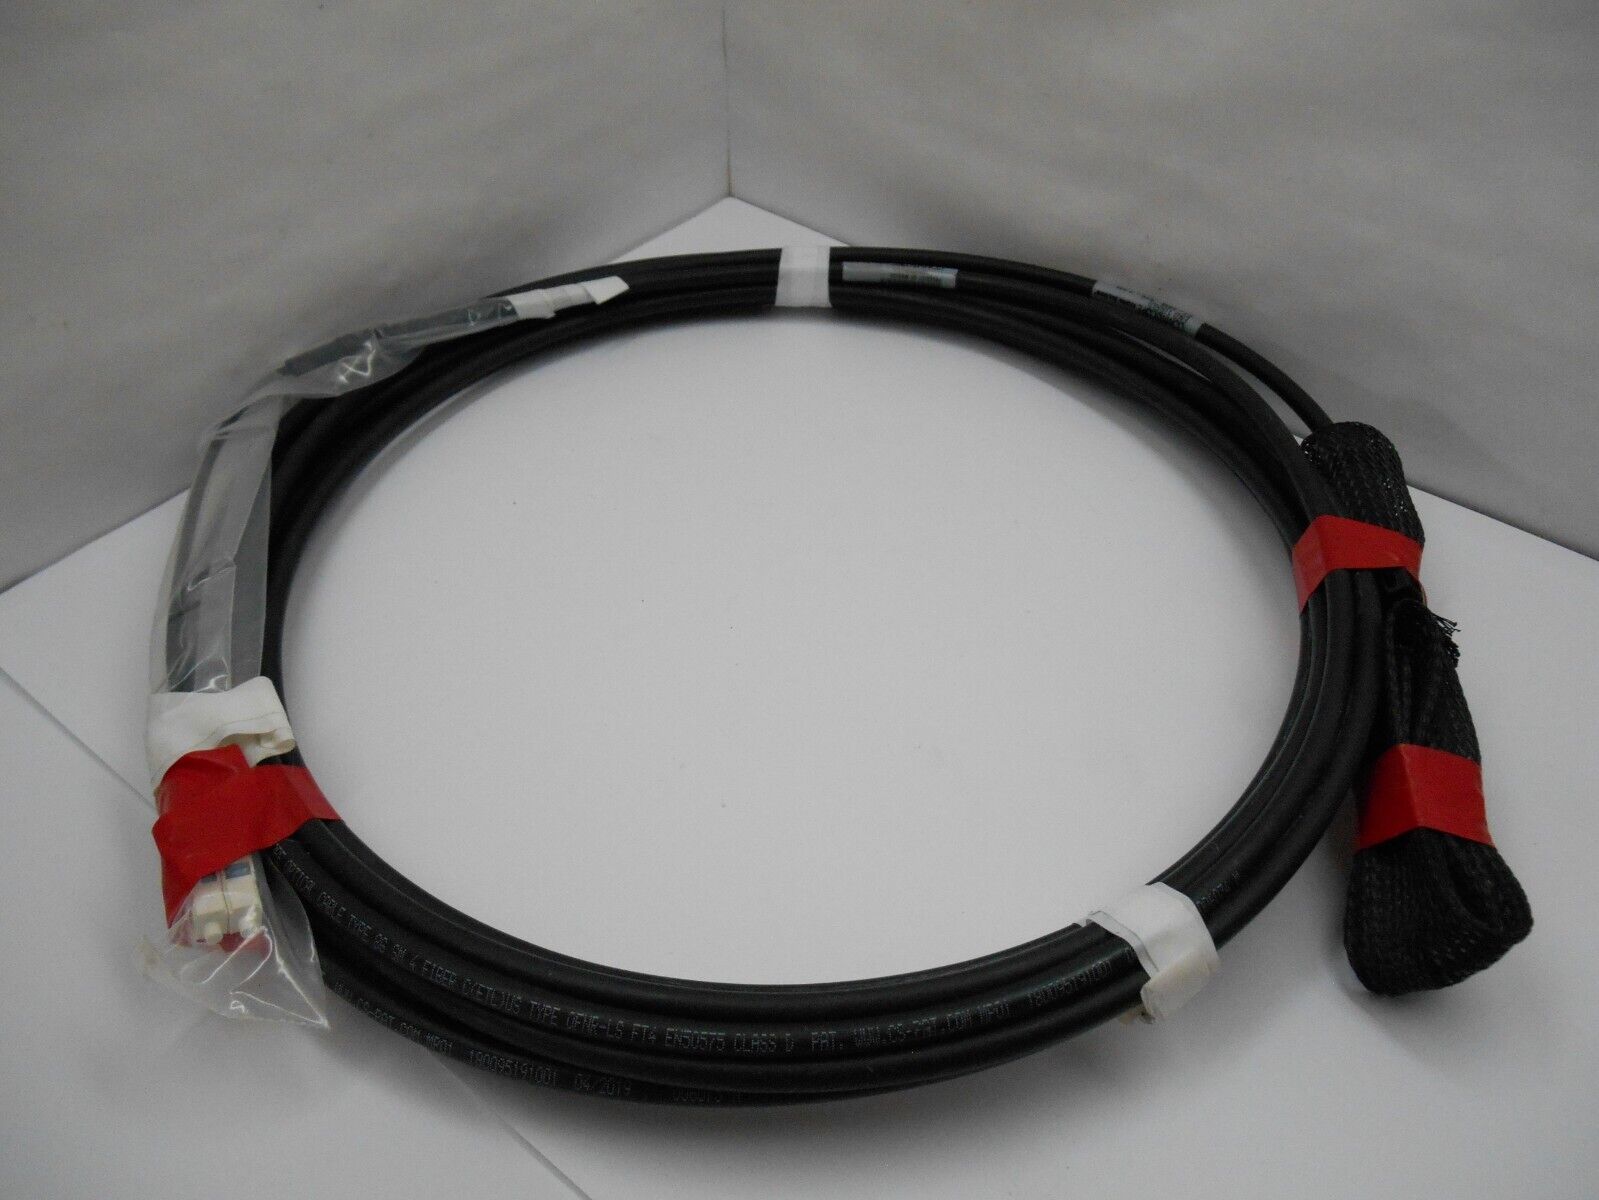 CommScope FJ-2SM-015-7.5M Ruggedized Fiber Cable Assembly, DLC to DLC, 7.5 METER